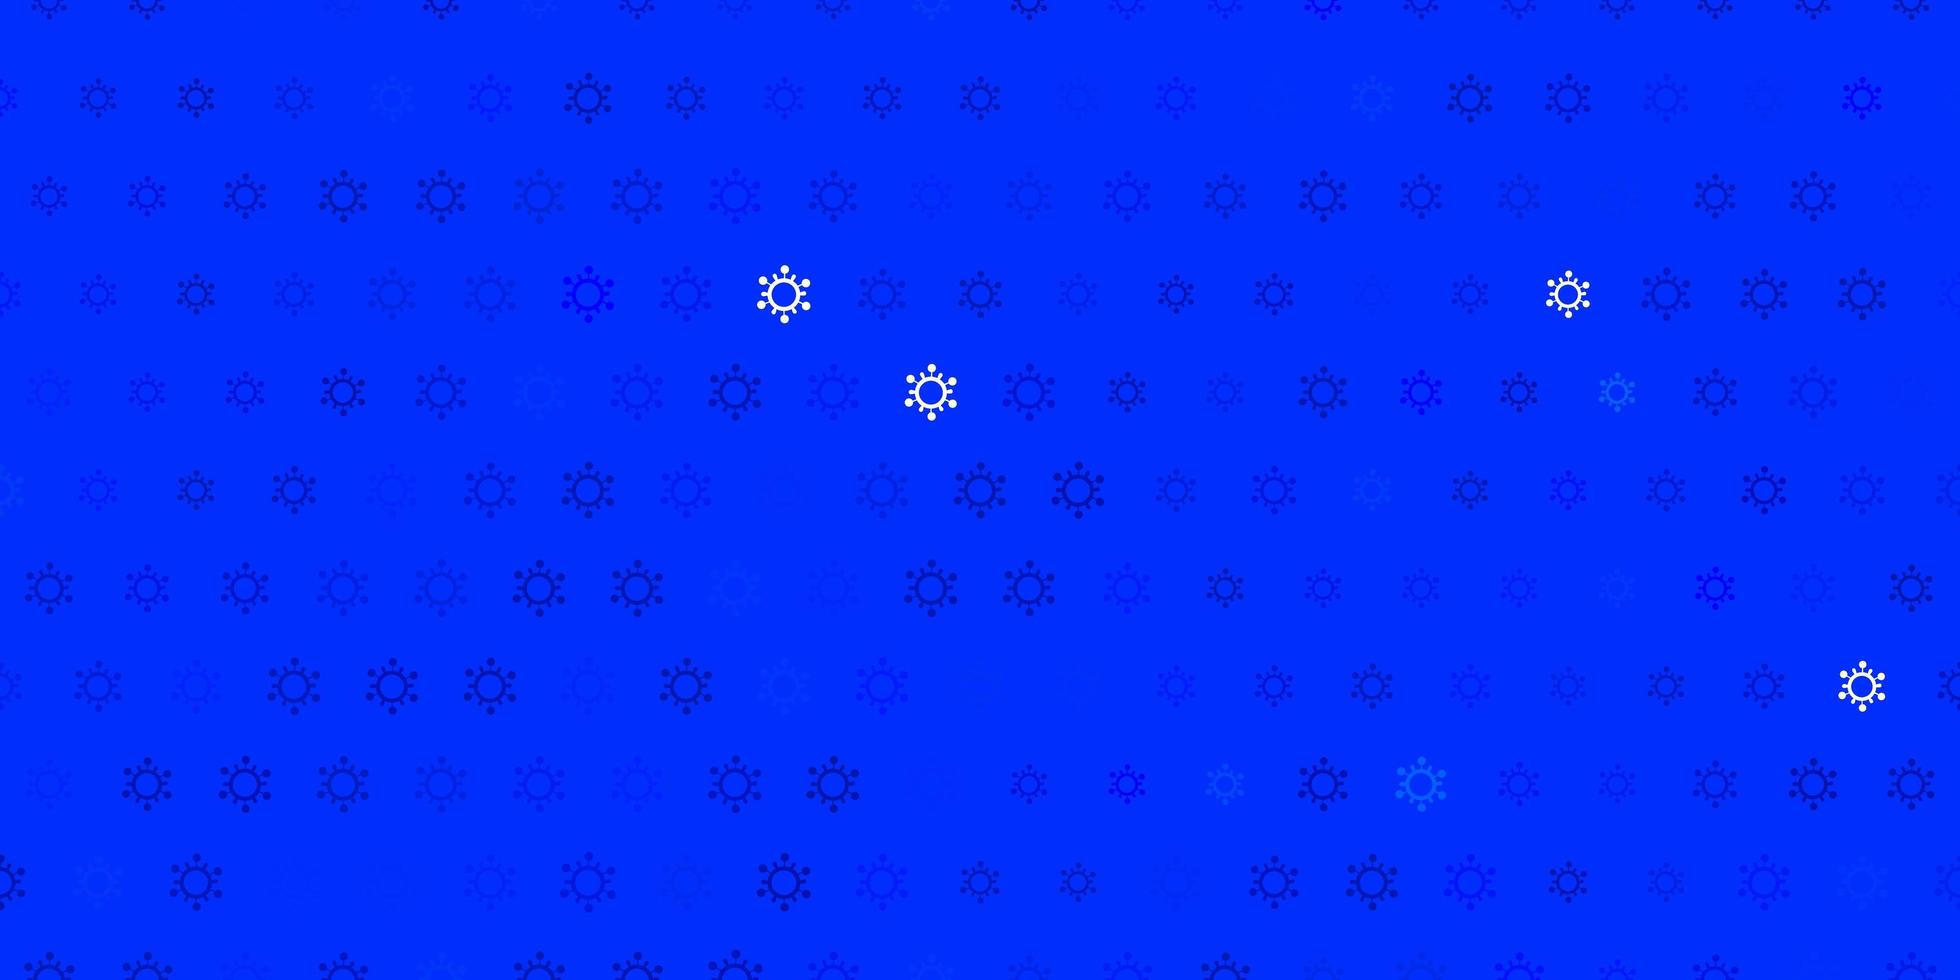 fundo vector azul escuro com símbolos covid19